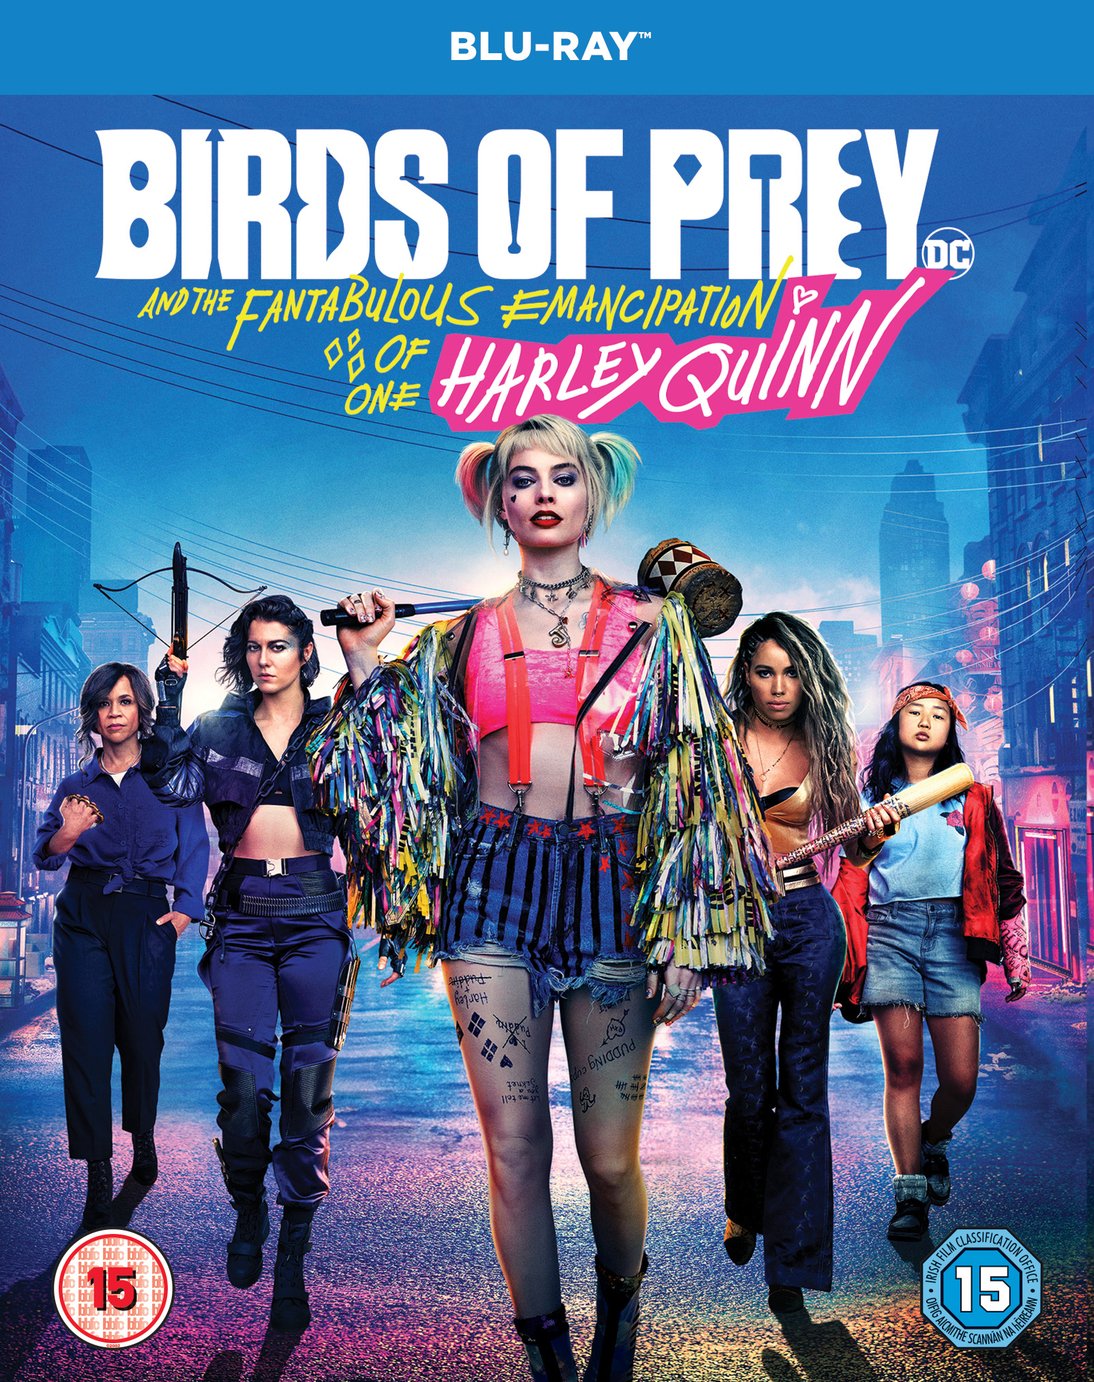 Birds of Prey Blu-ray Review